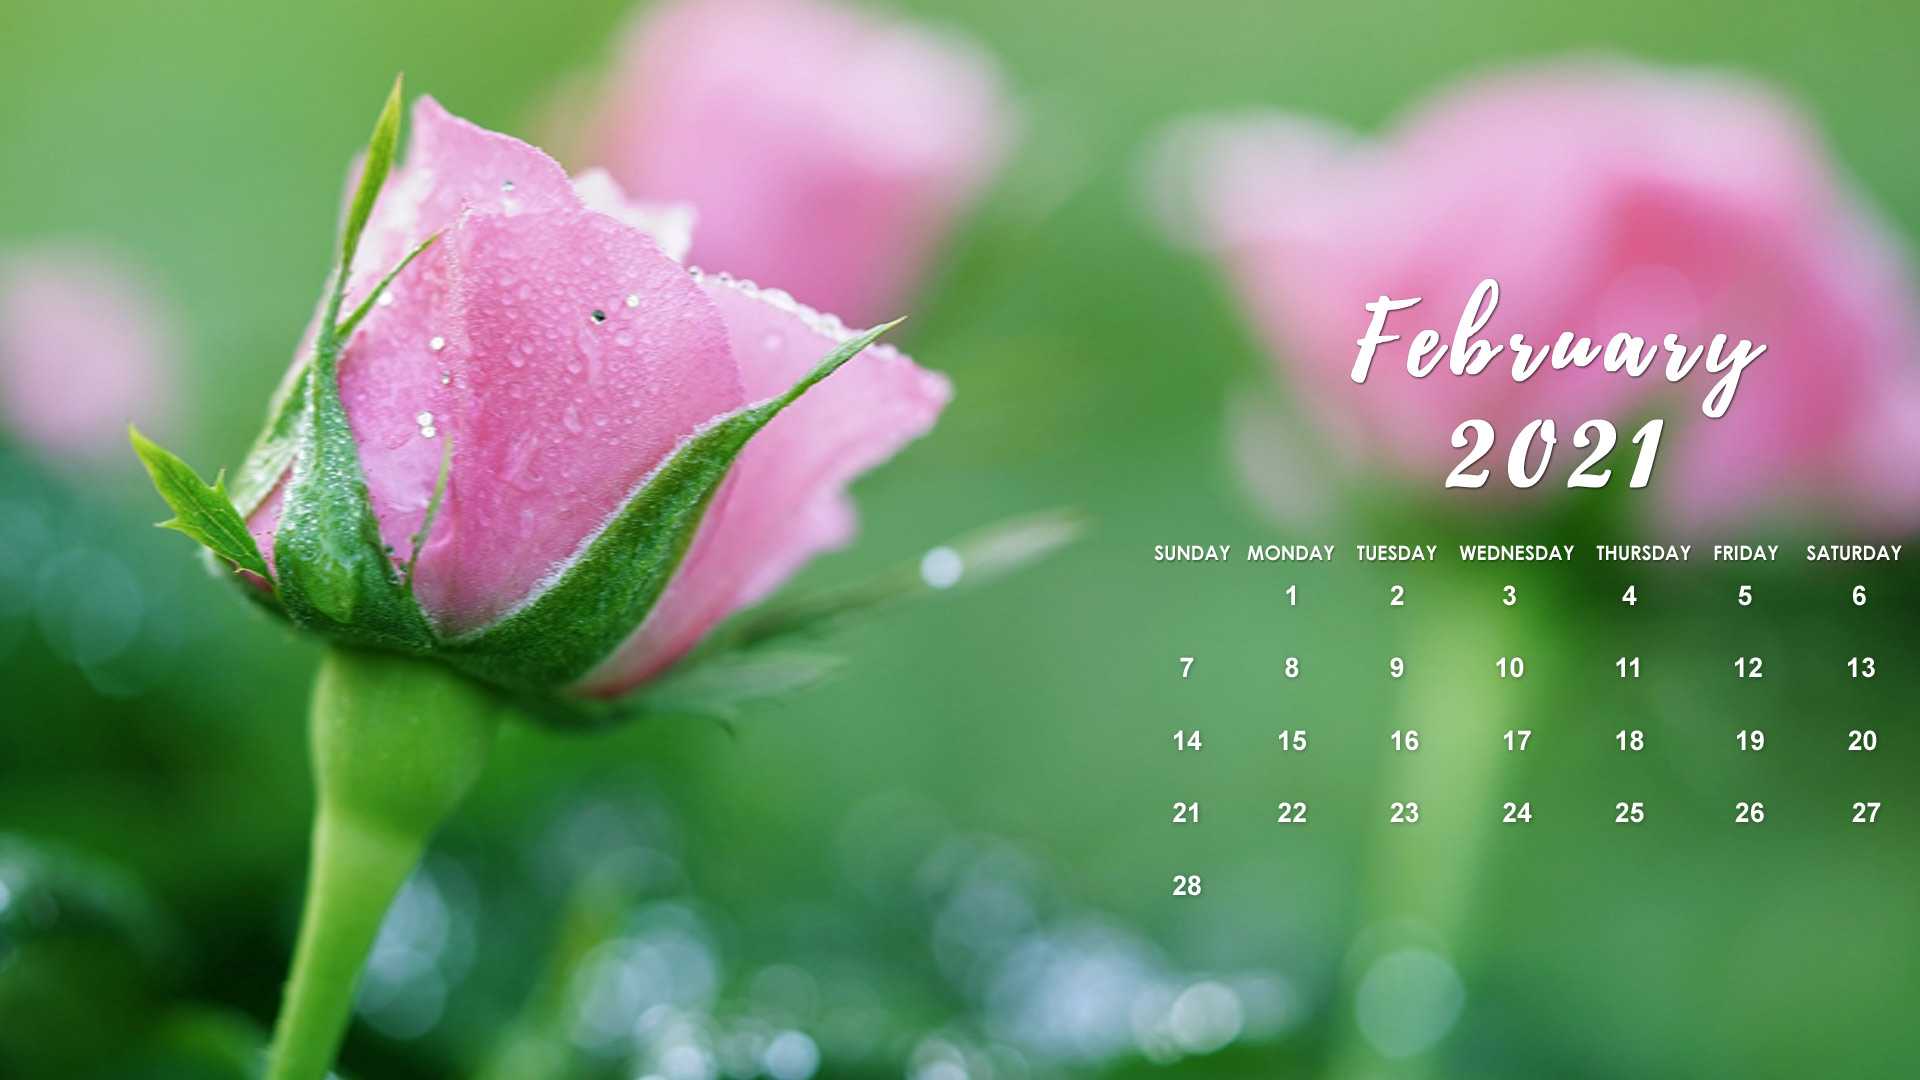 2025 February Calendar Wallpaper And Screensavers Kids Joan Ronica